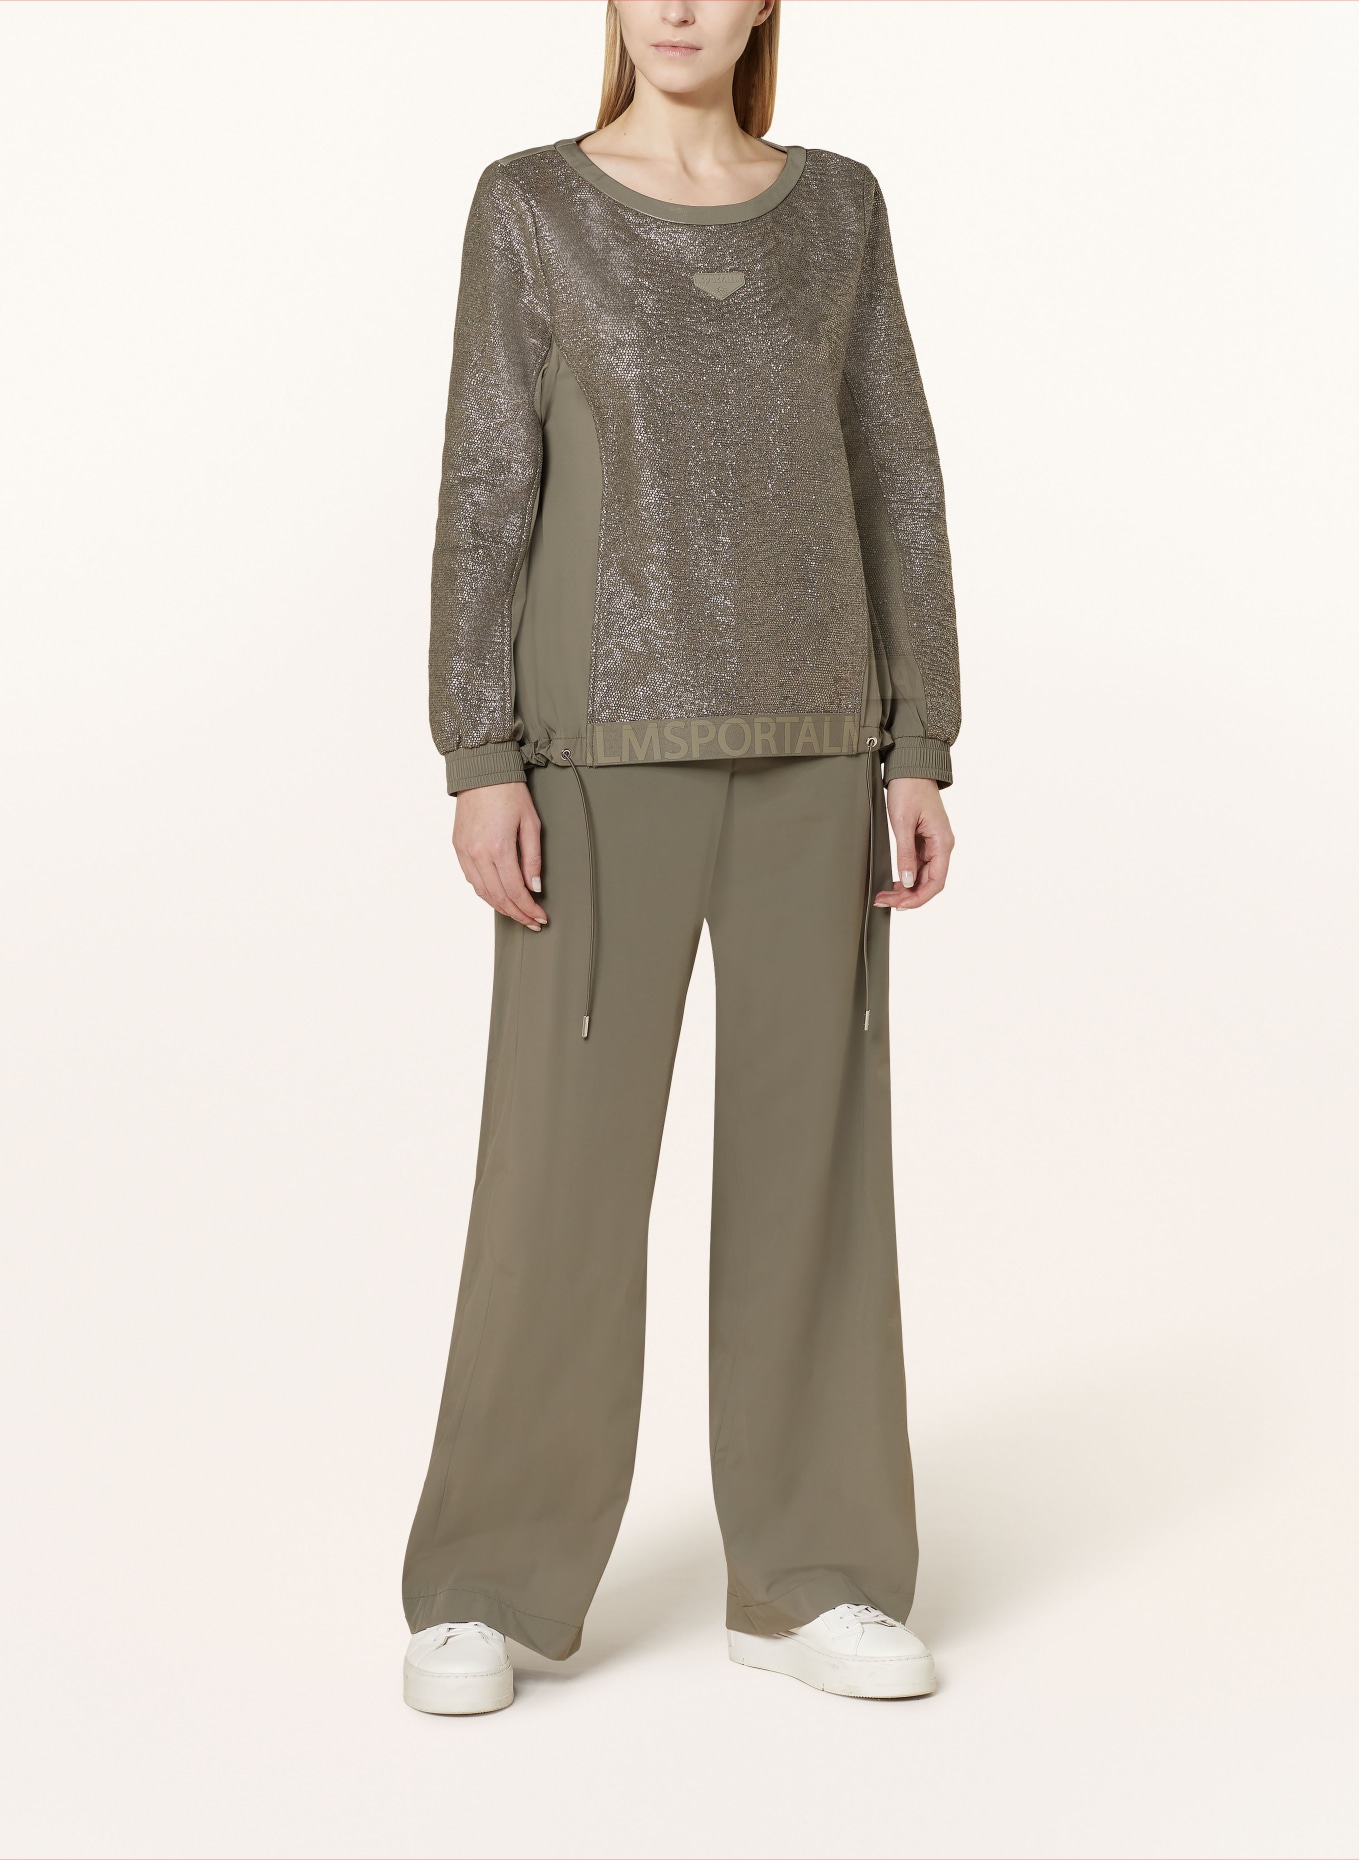 ULLI EHRLICH SPORTALM Sweatshirt im Materialmix, Farbe: KHAKI/ SILBER (Bild 2)